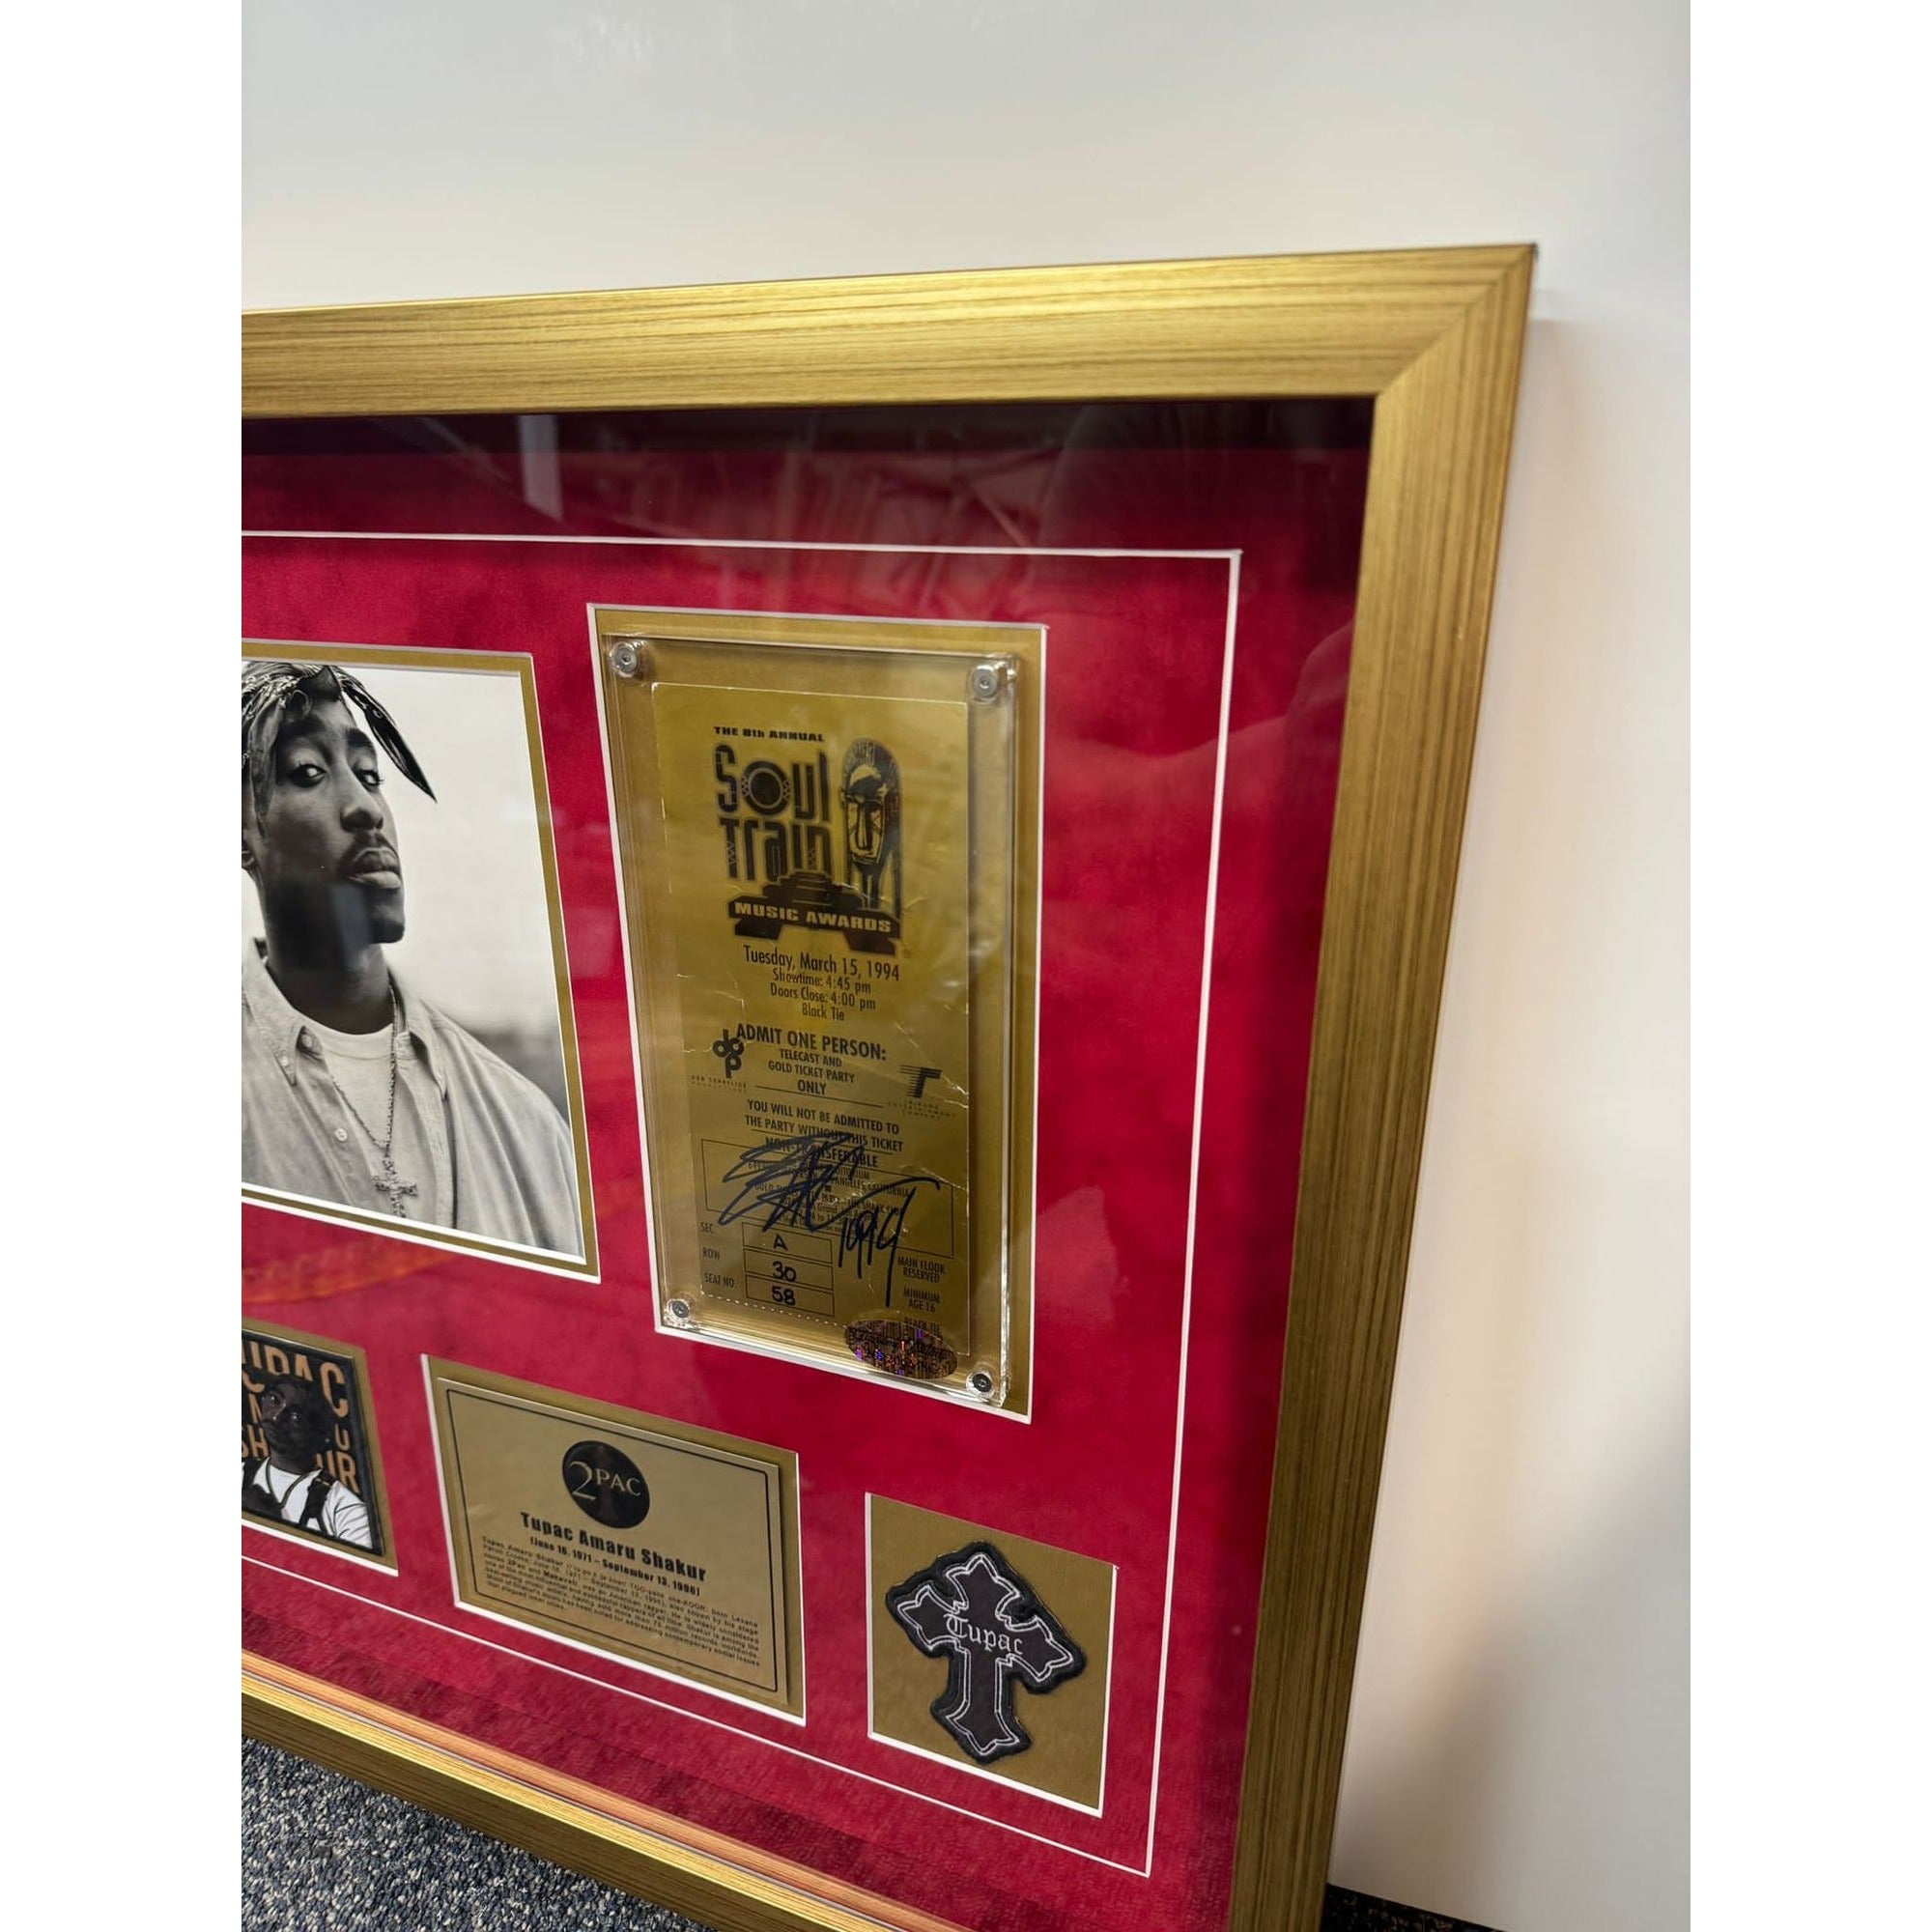 Tupac Shakur Soul Train Music Awards ticket signed framed 21x21.5"